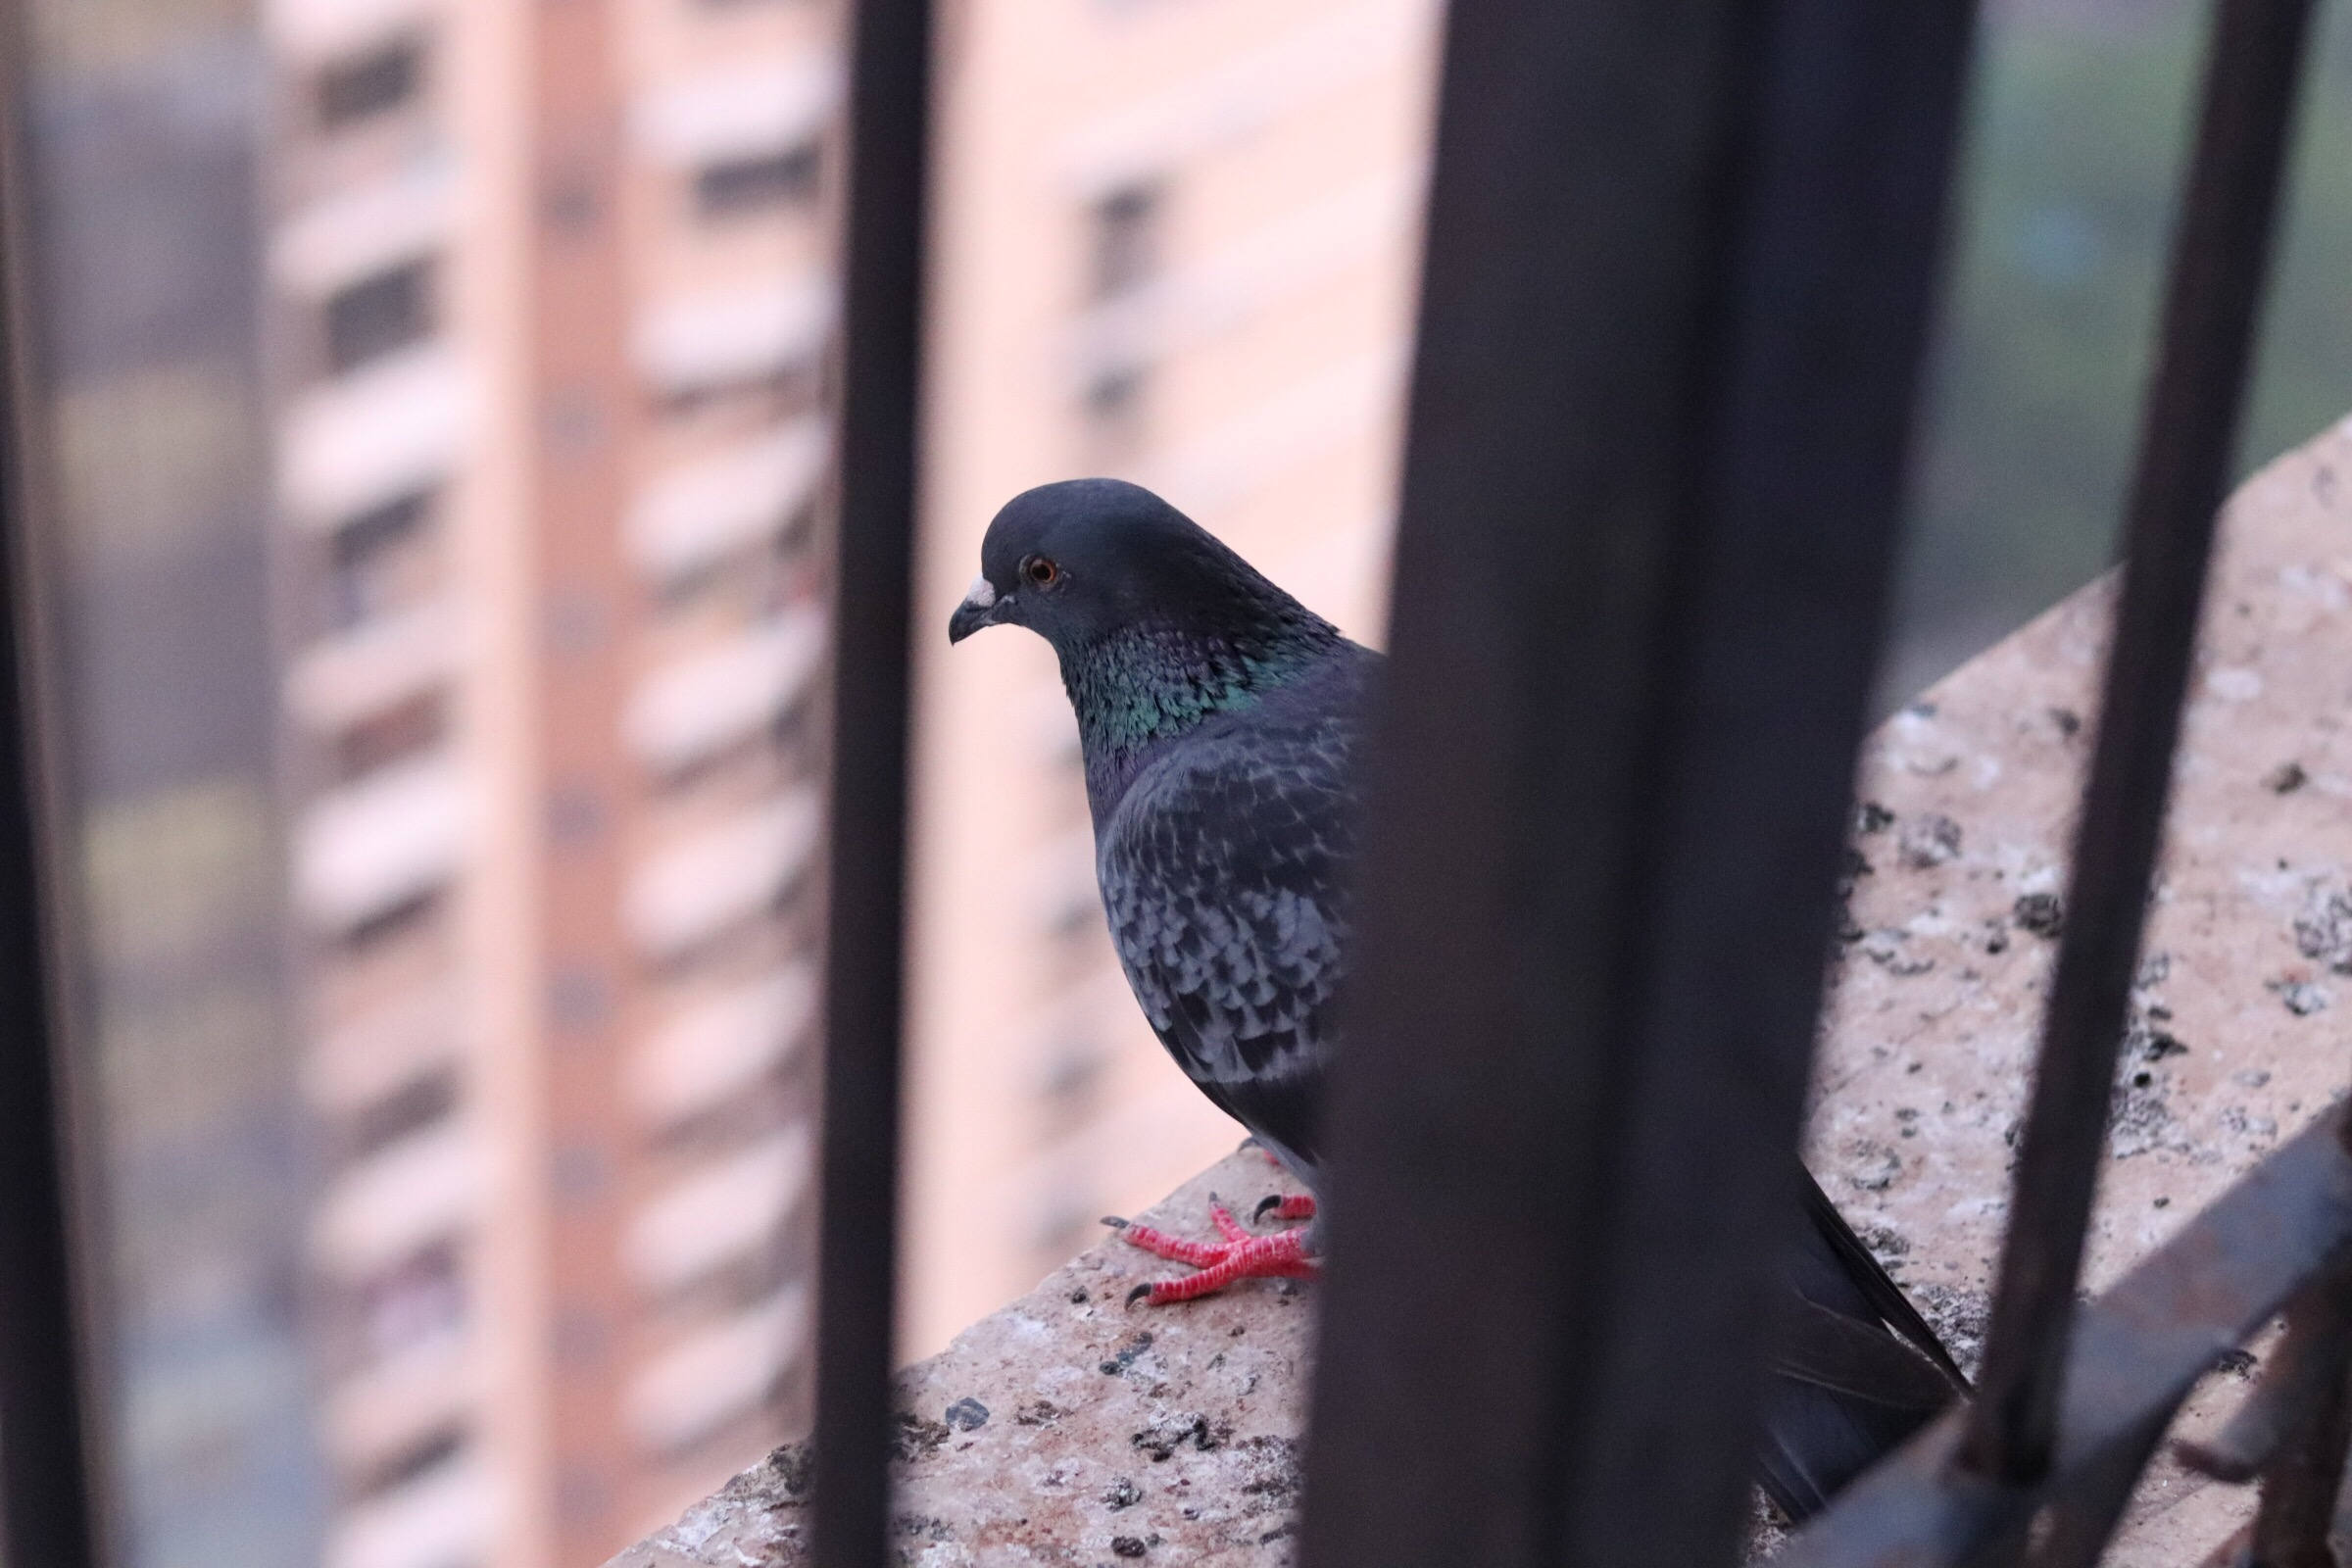 Pigeon on the window ledge